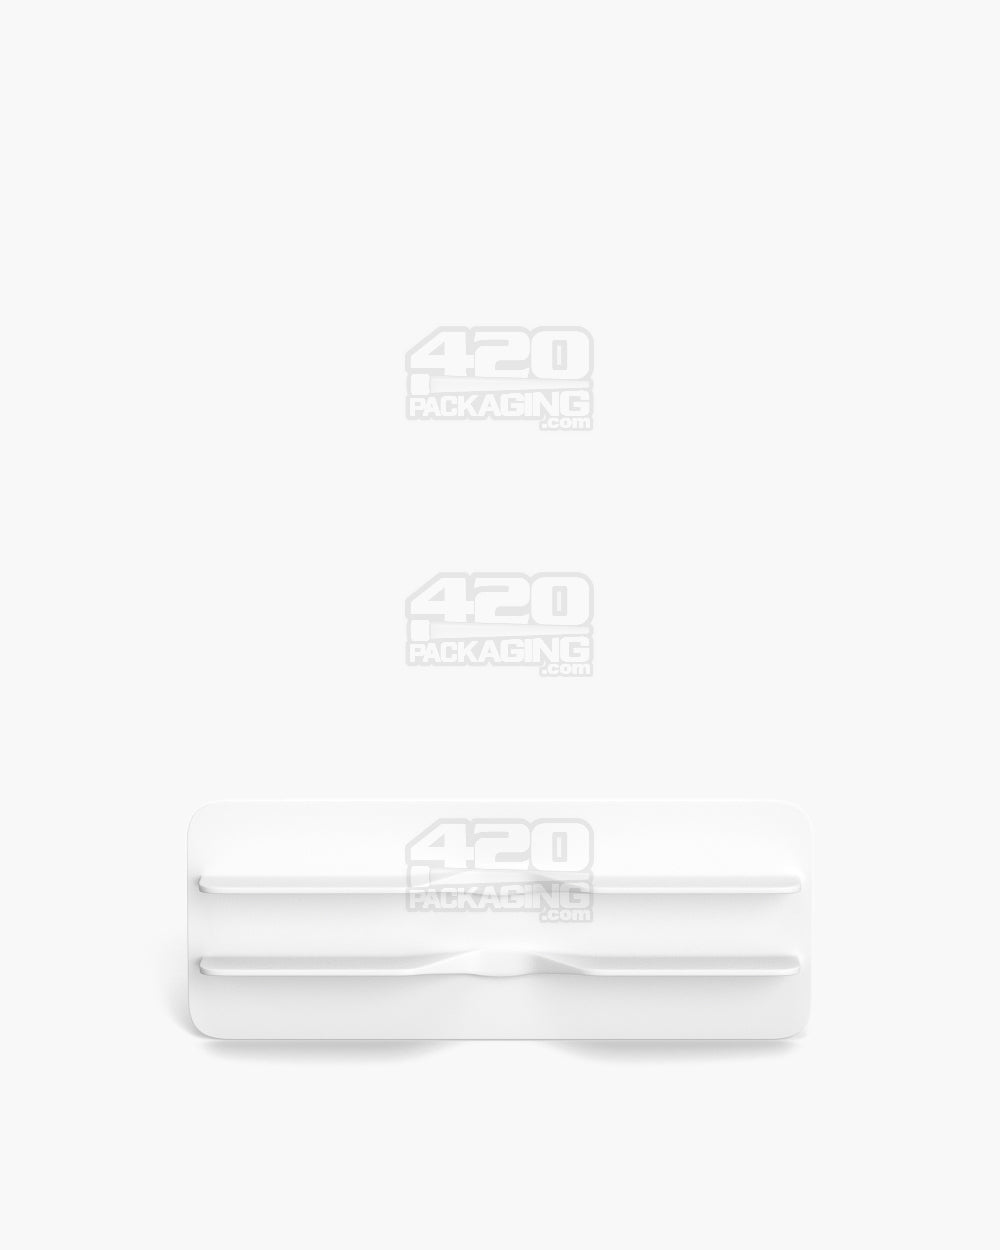 25mm Pollen Gear SnapTech Small White Plastic Insert Tray Foam 2500/Box - 3